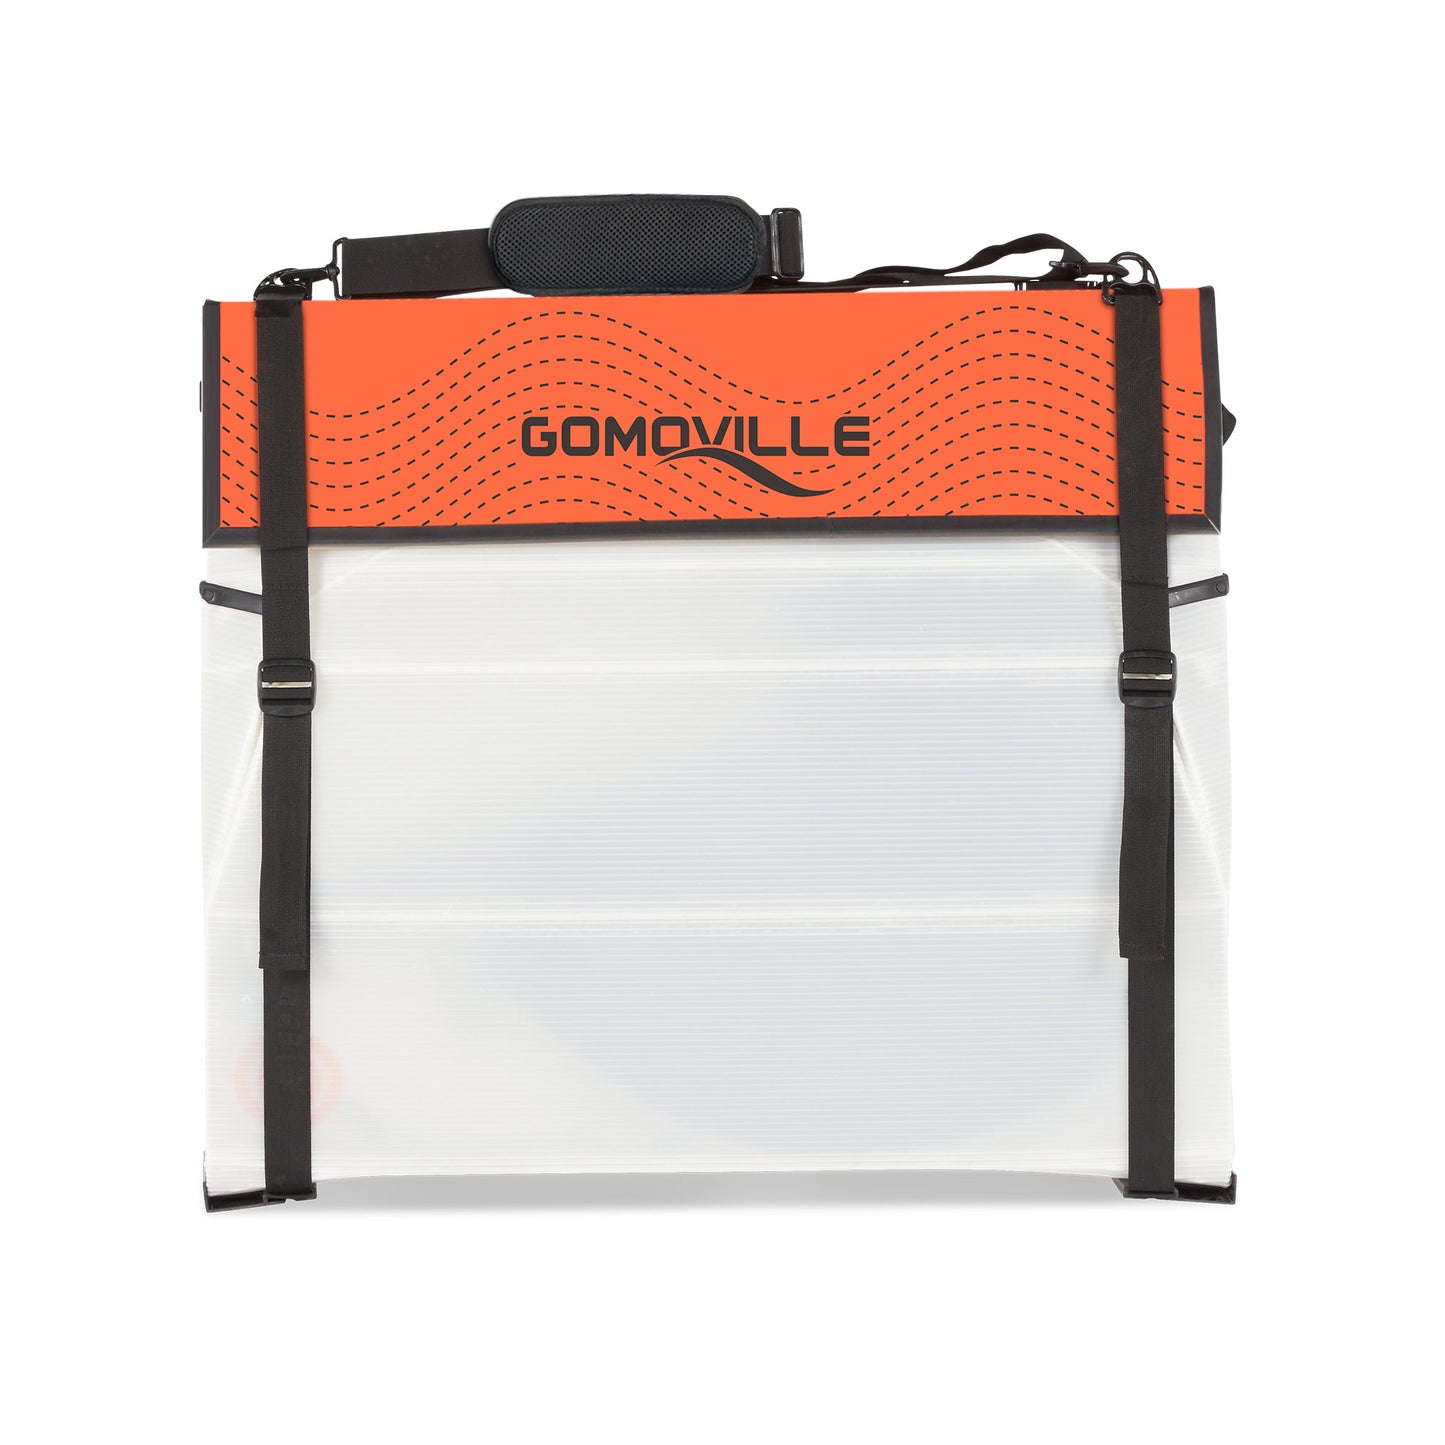 Gomoville Folding Kayak - G2 (One Seat)